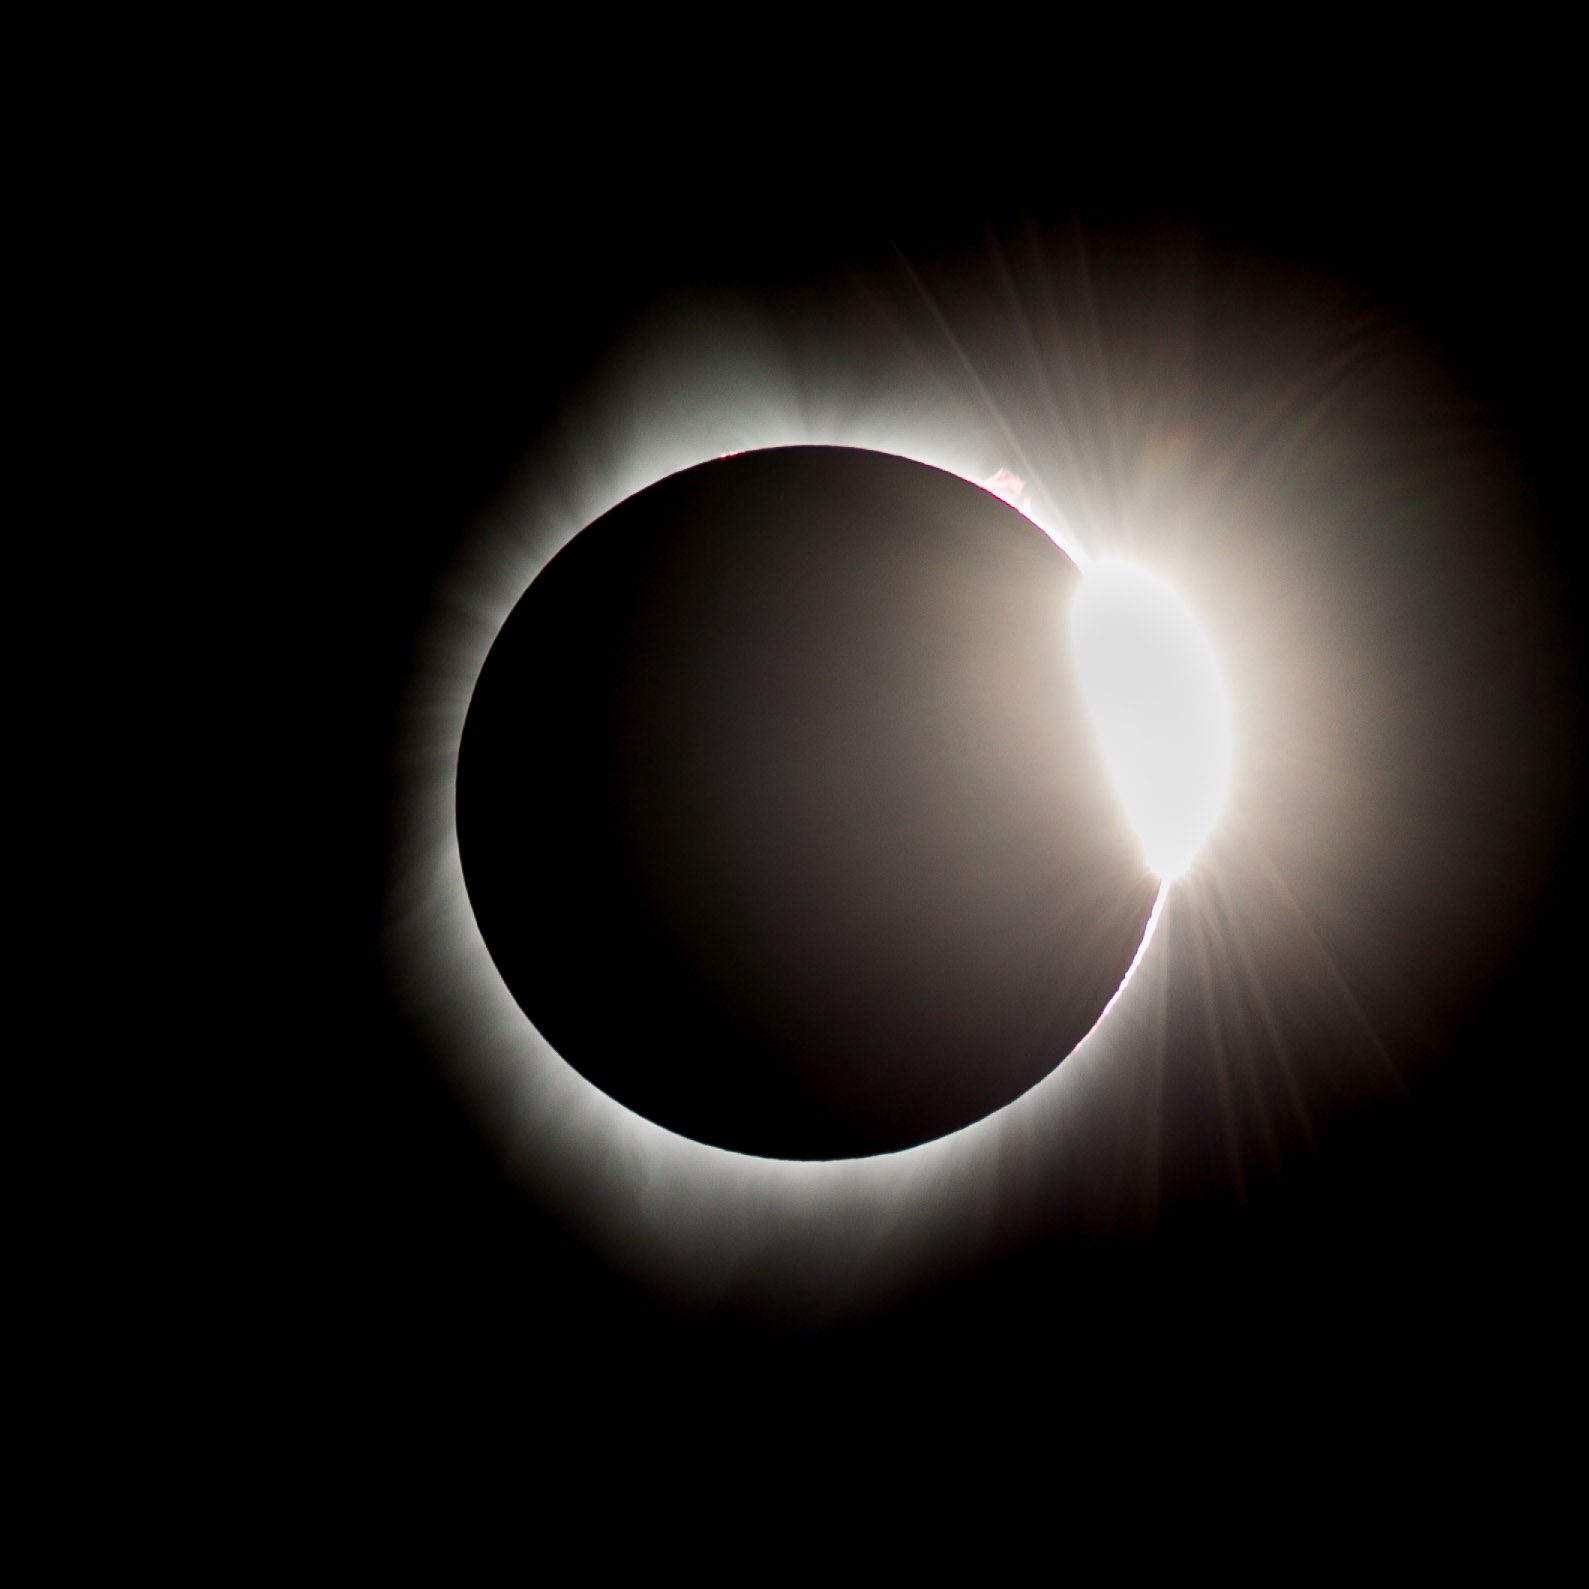 Diamond Ring, 2017 Total Solar Eclipse